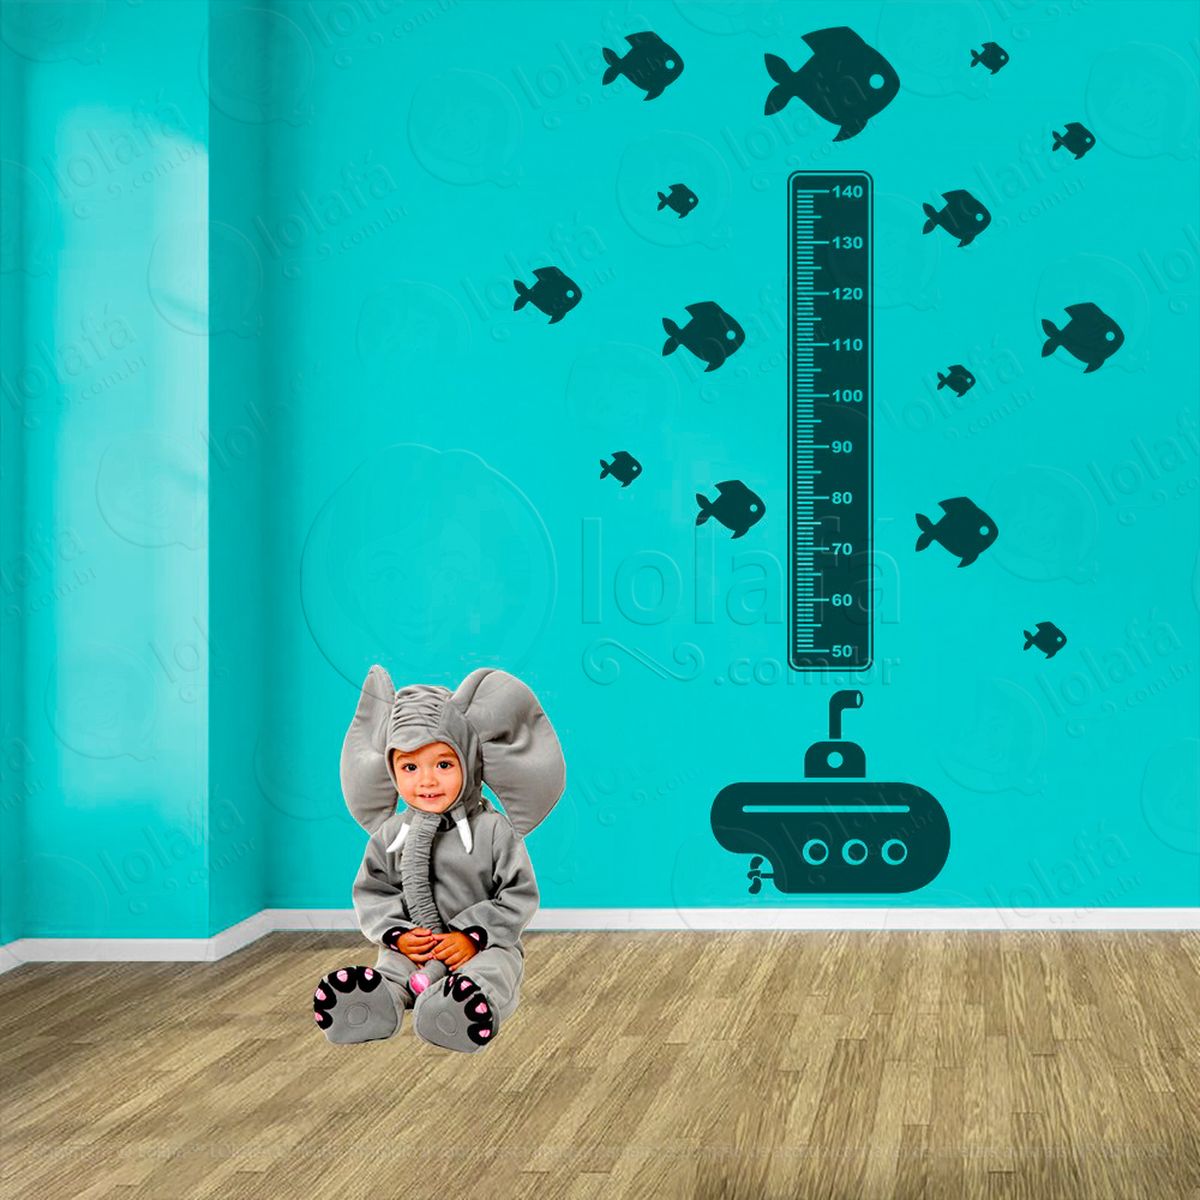 submarino e peixes adesivo régua de crescimento infantil, medidor de altura para quarto, porta e parede - mod:1464